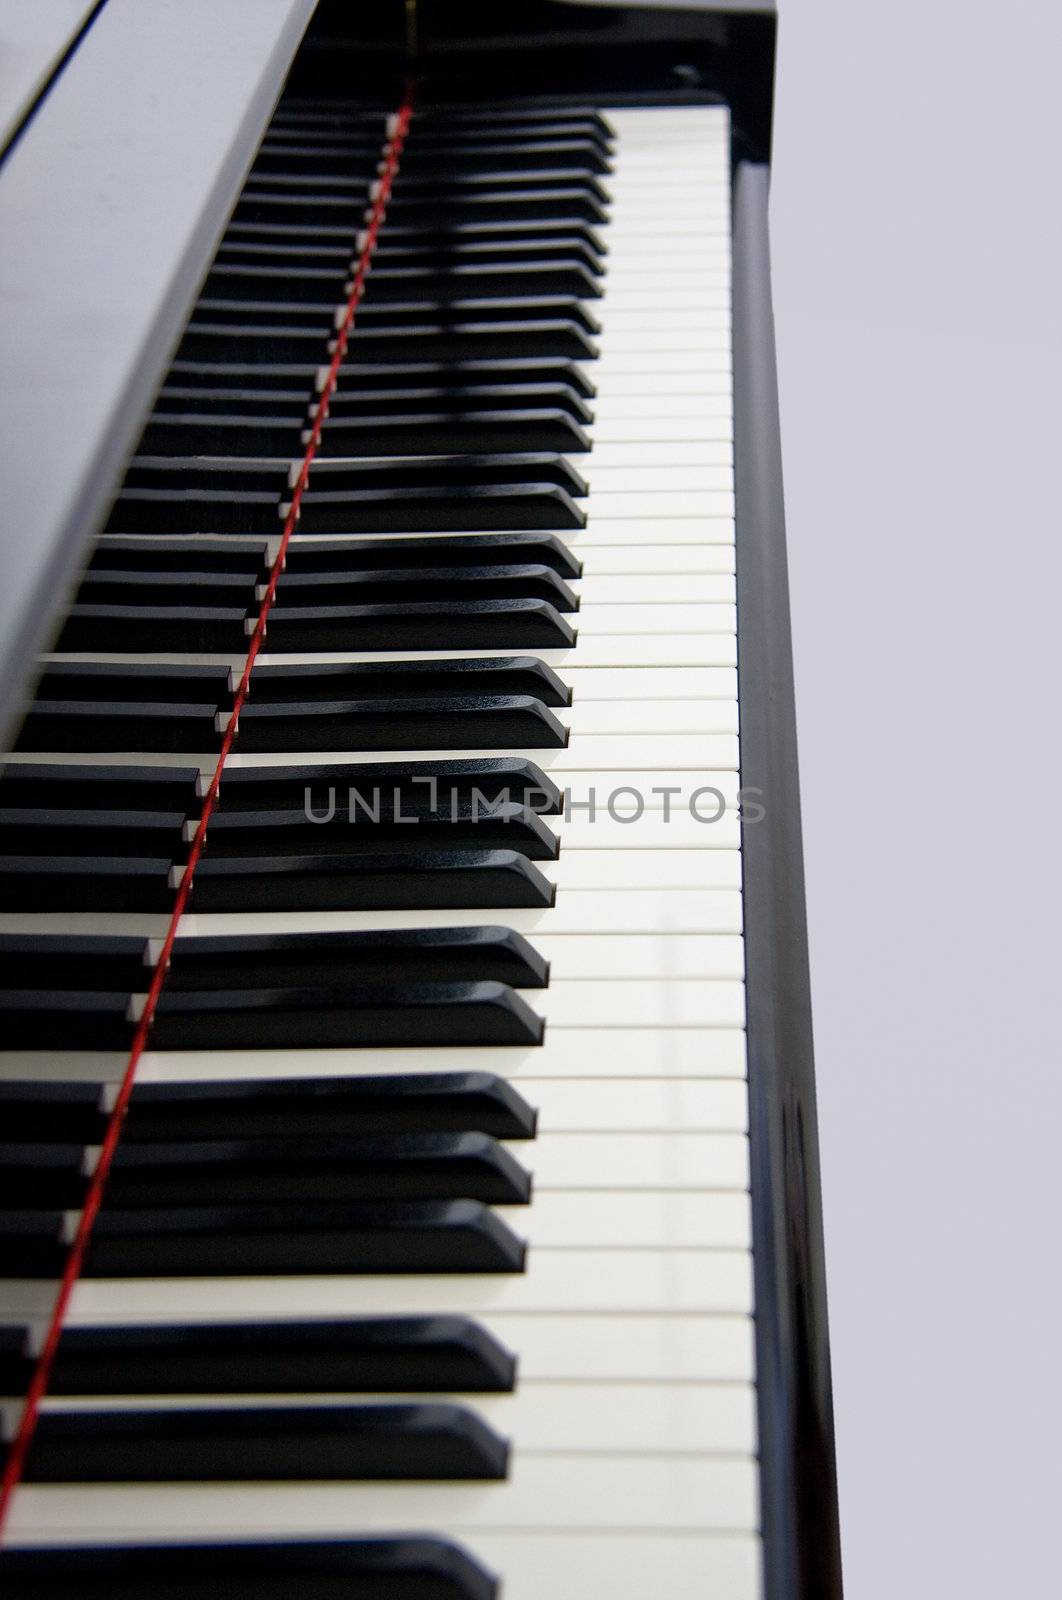 Piano Keyboard by steheap